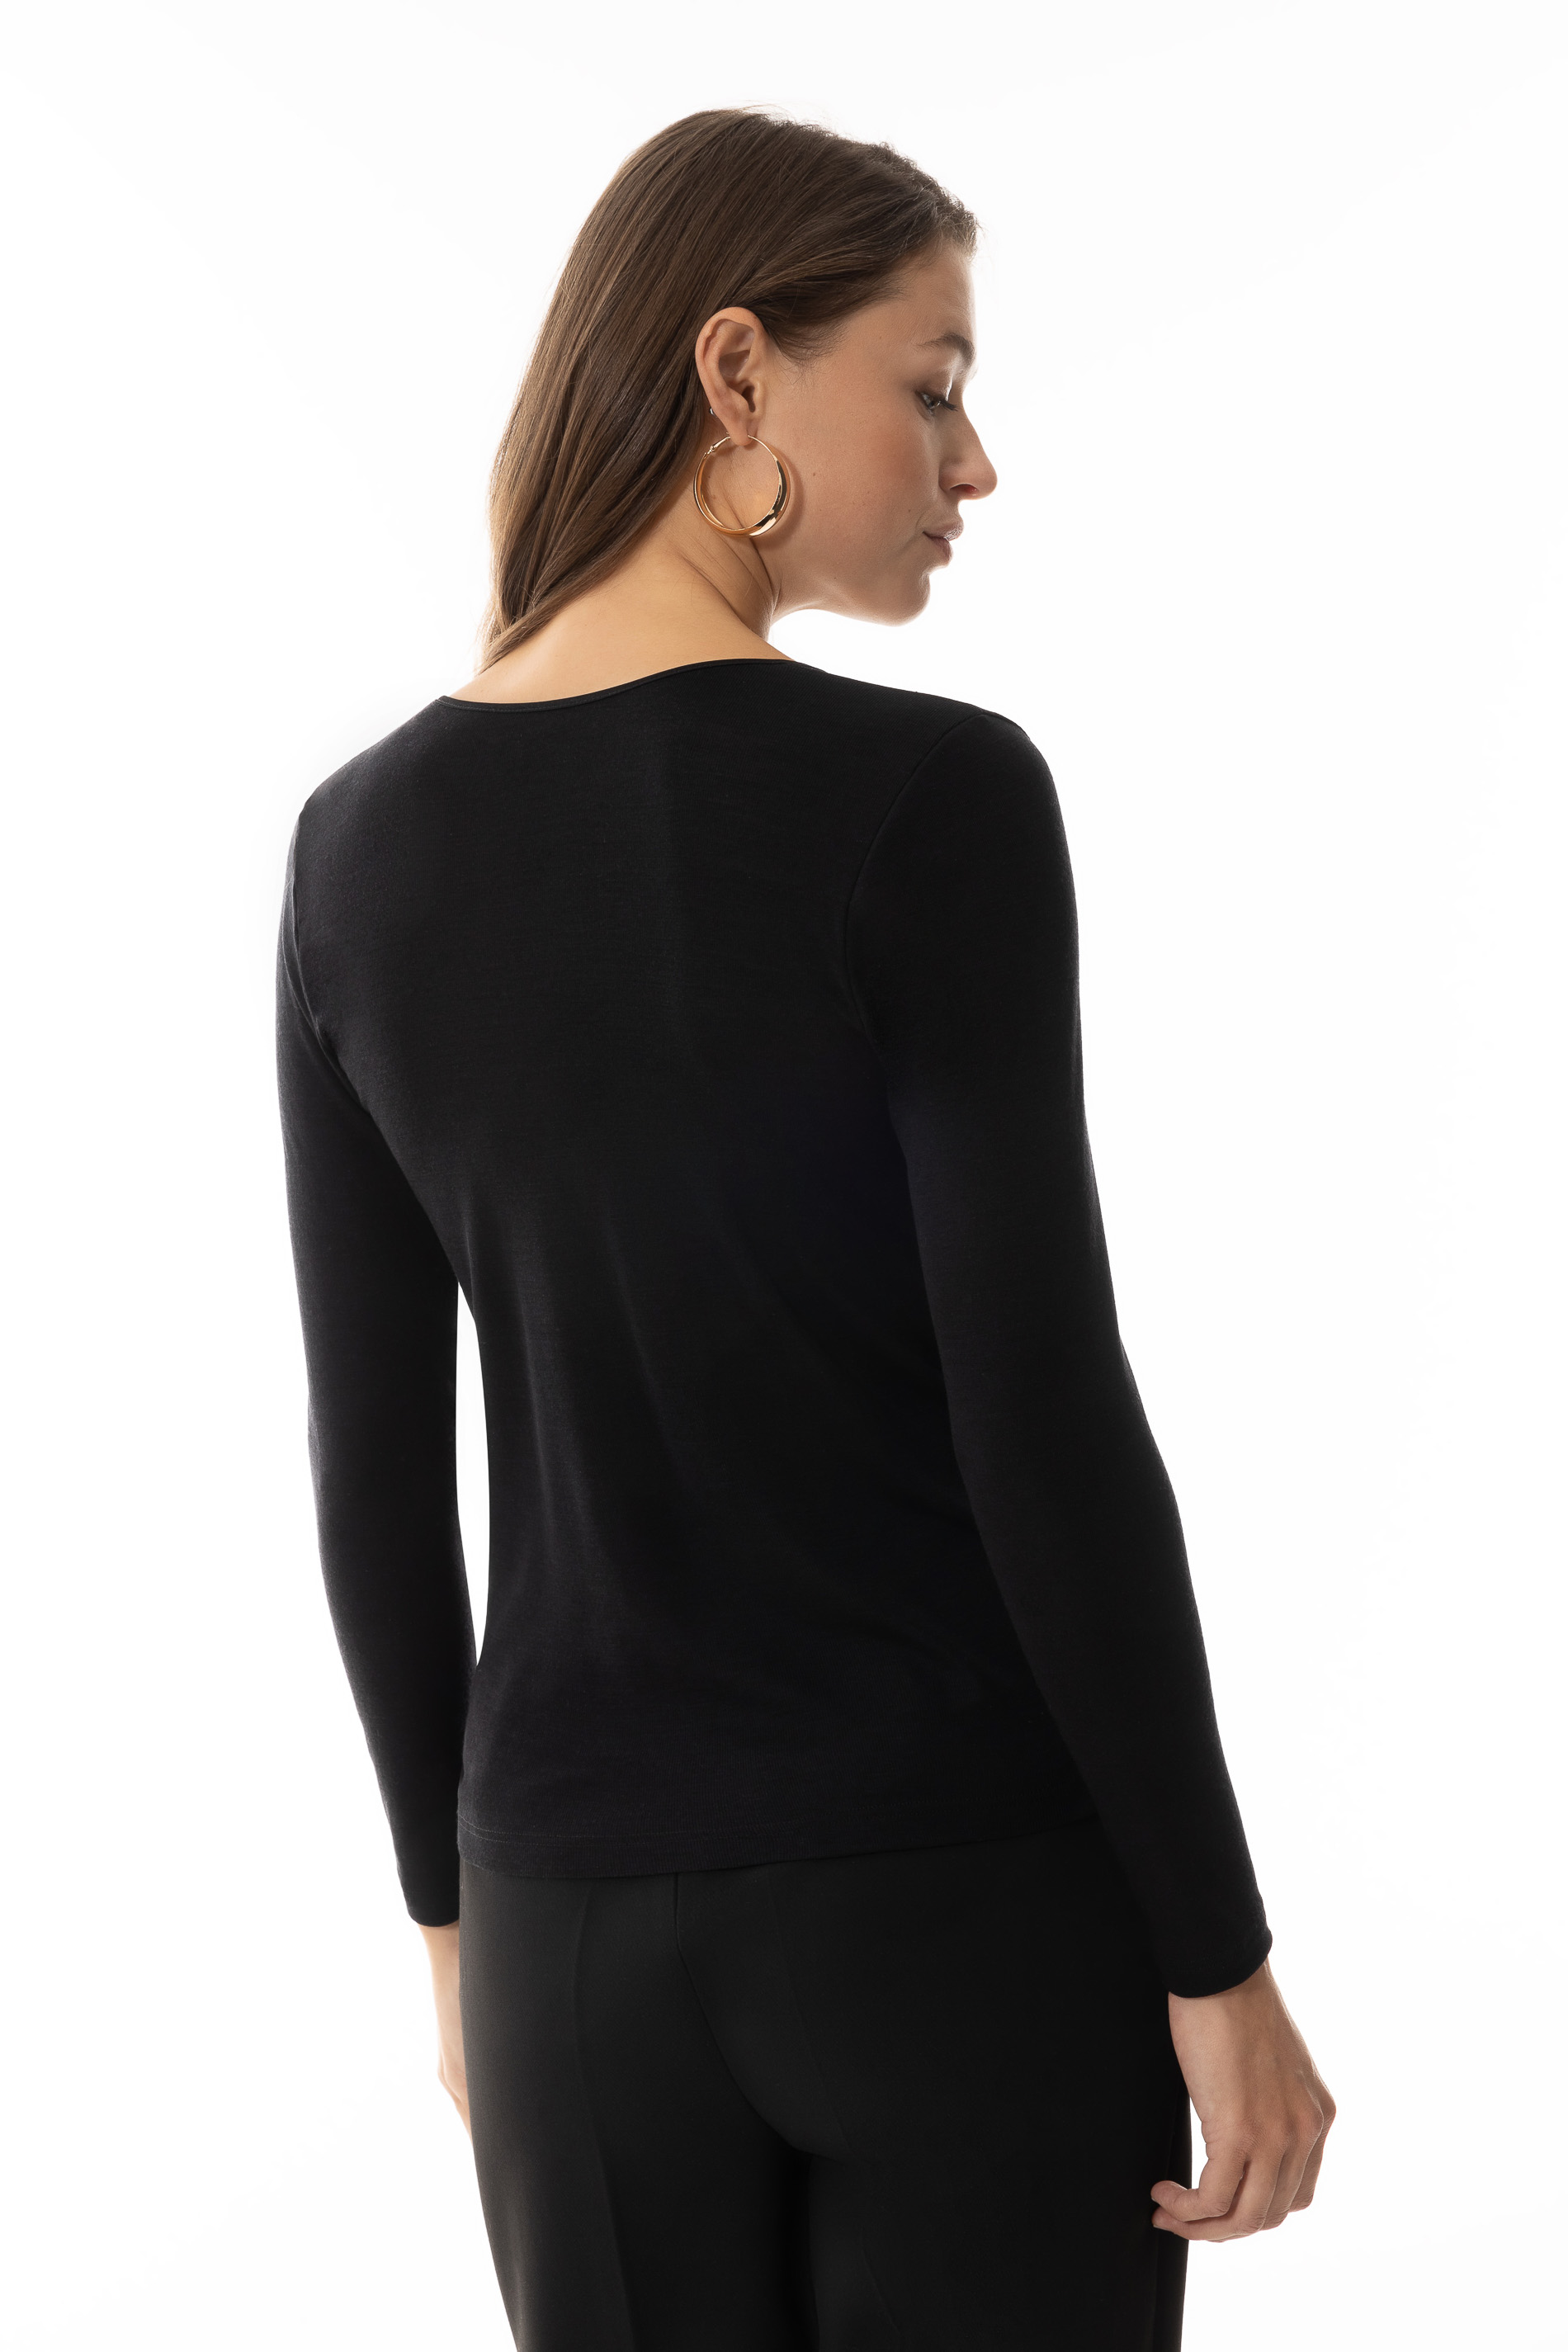 Long-sleeved vest Black Serie Exquisite Rear View | mey®